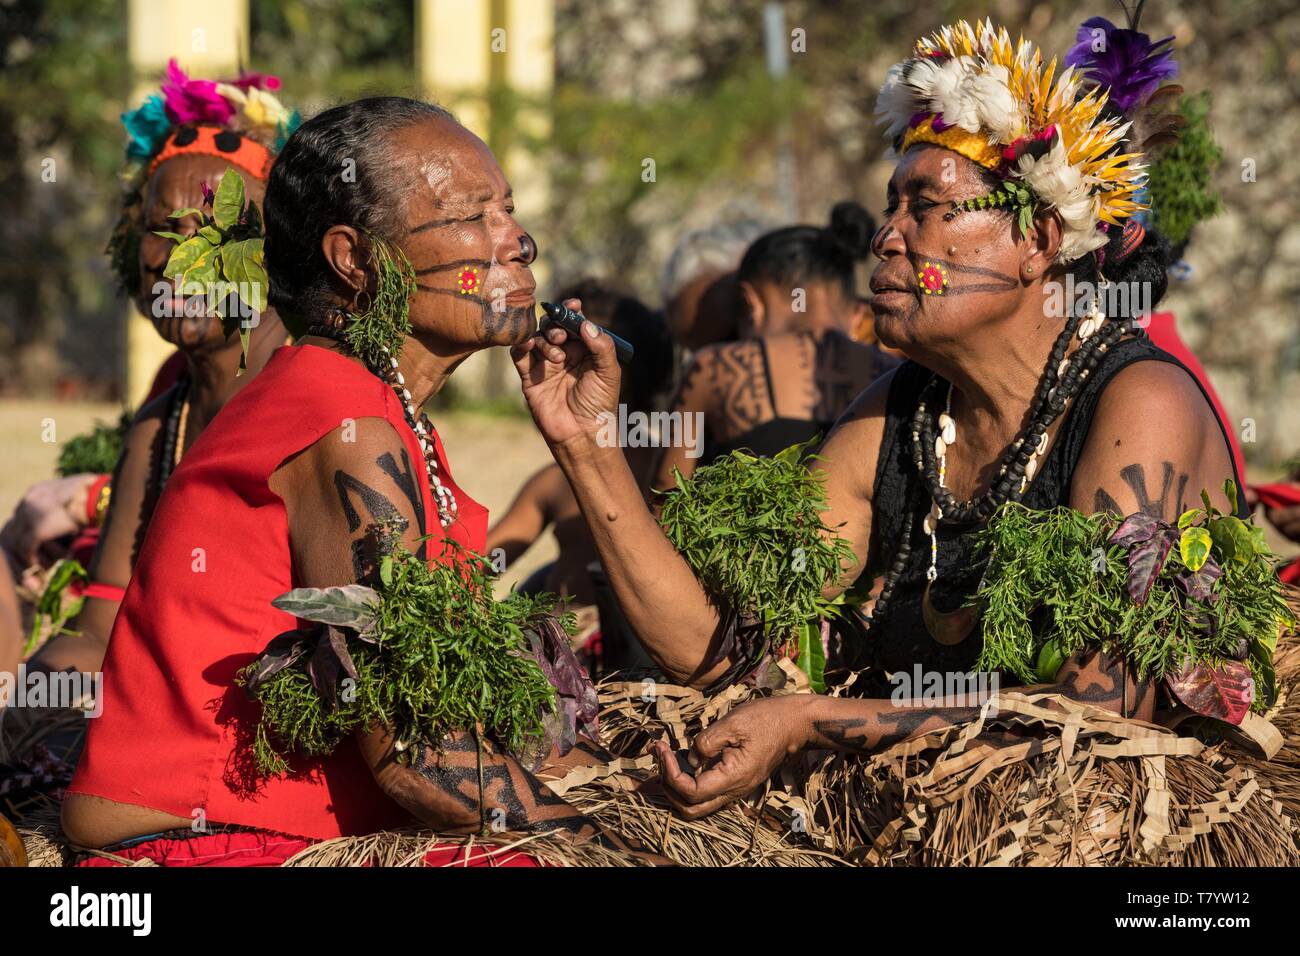 - Papua-New Guinea, National Capital District, Port Moresby, Motu Stamm, hanuabada Dorf auf Stelzen, traditionelles Tanzen, Singen - Singen Stockfoto